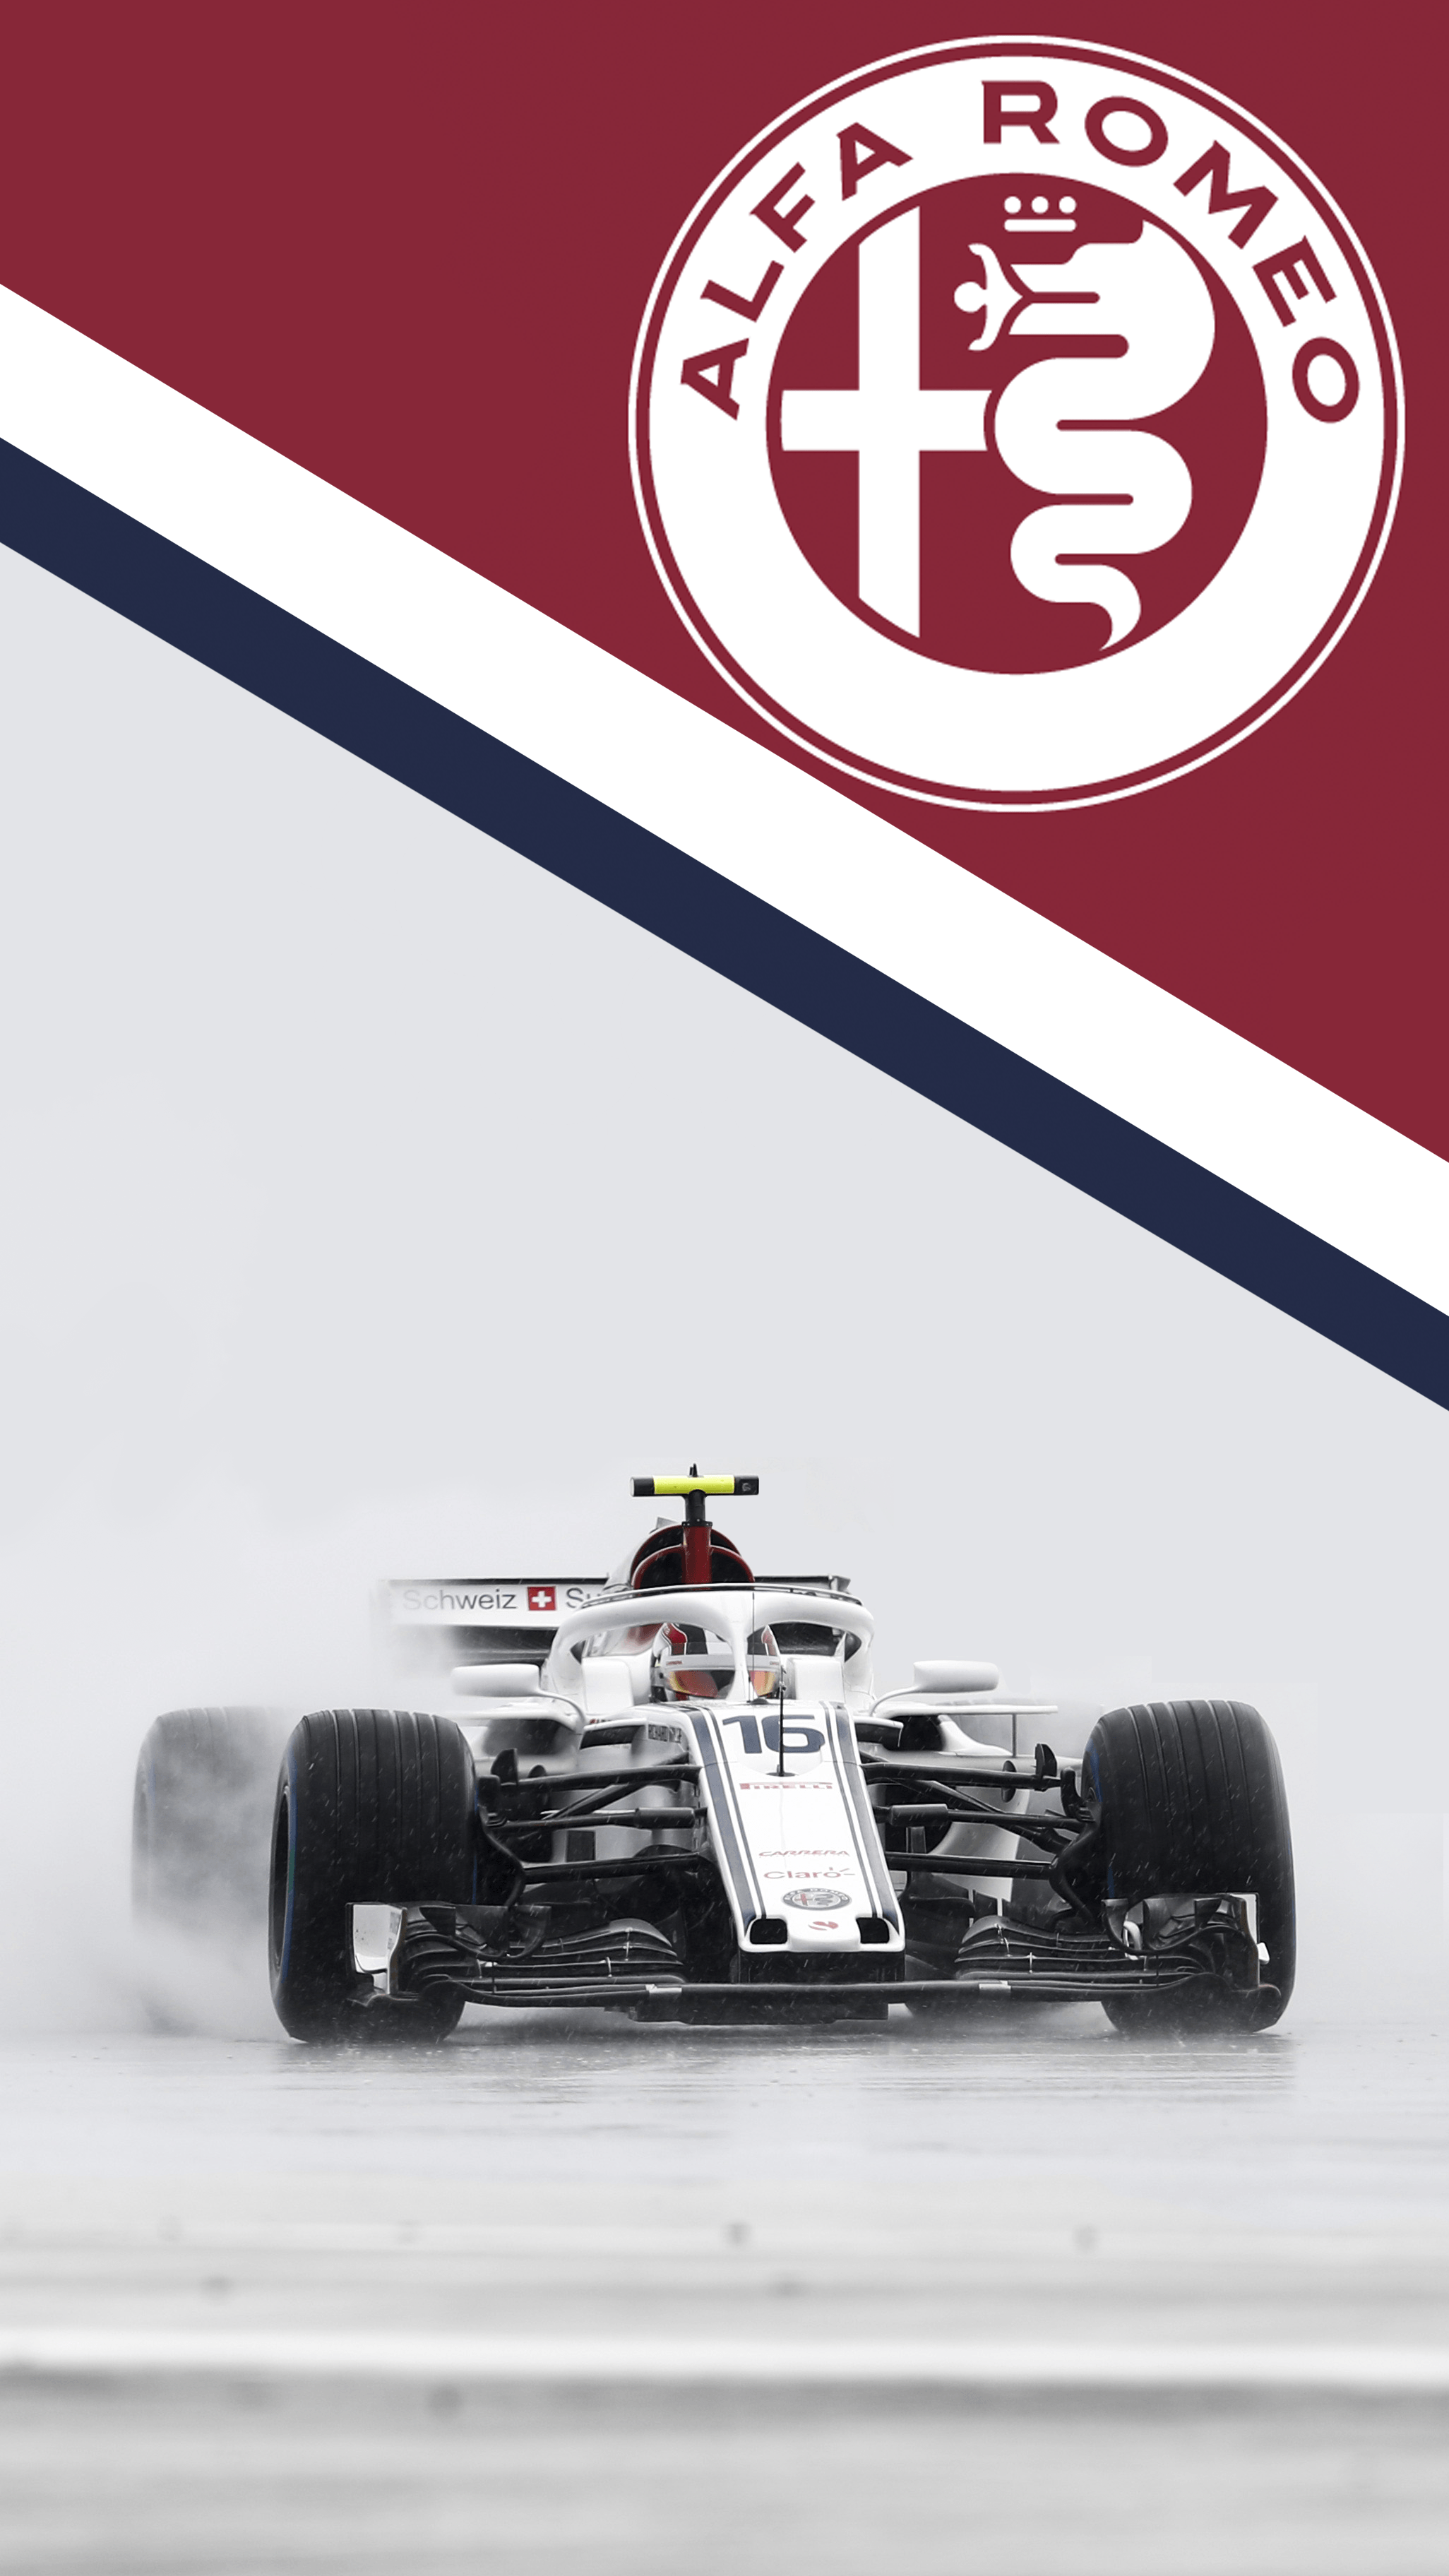 Sauber Leclerc in the Rain [mobile wallpaper]